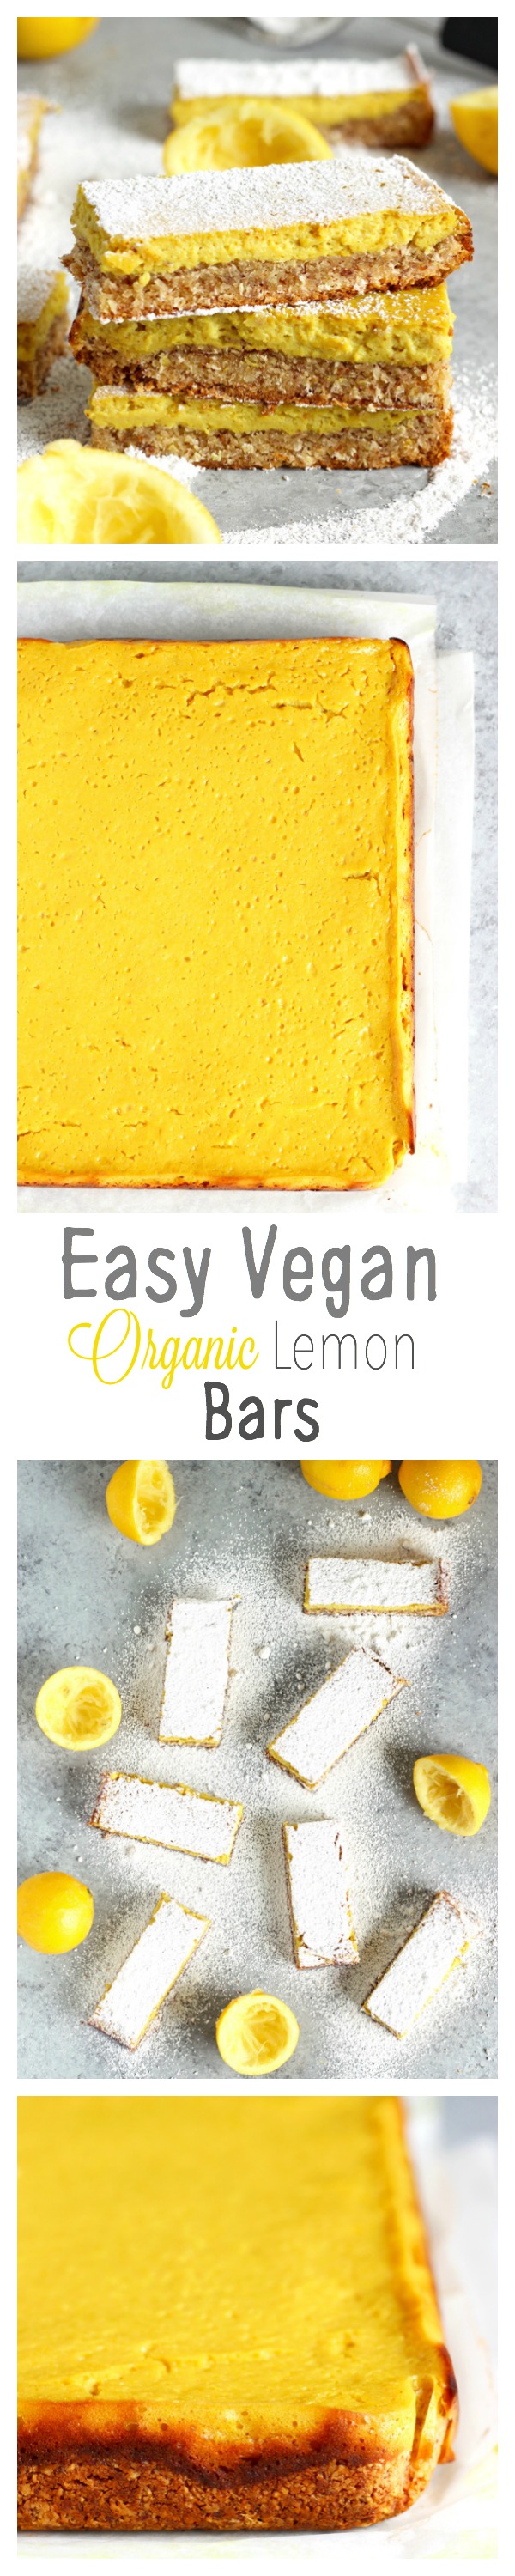 Easy Vegan Organic Lemon Bars - A super easy lemony snack just in time for Easter! Healthy and totally vegan. NeuroticMommy.com #healthy #vegan